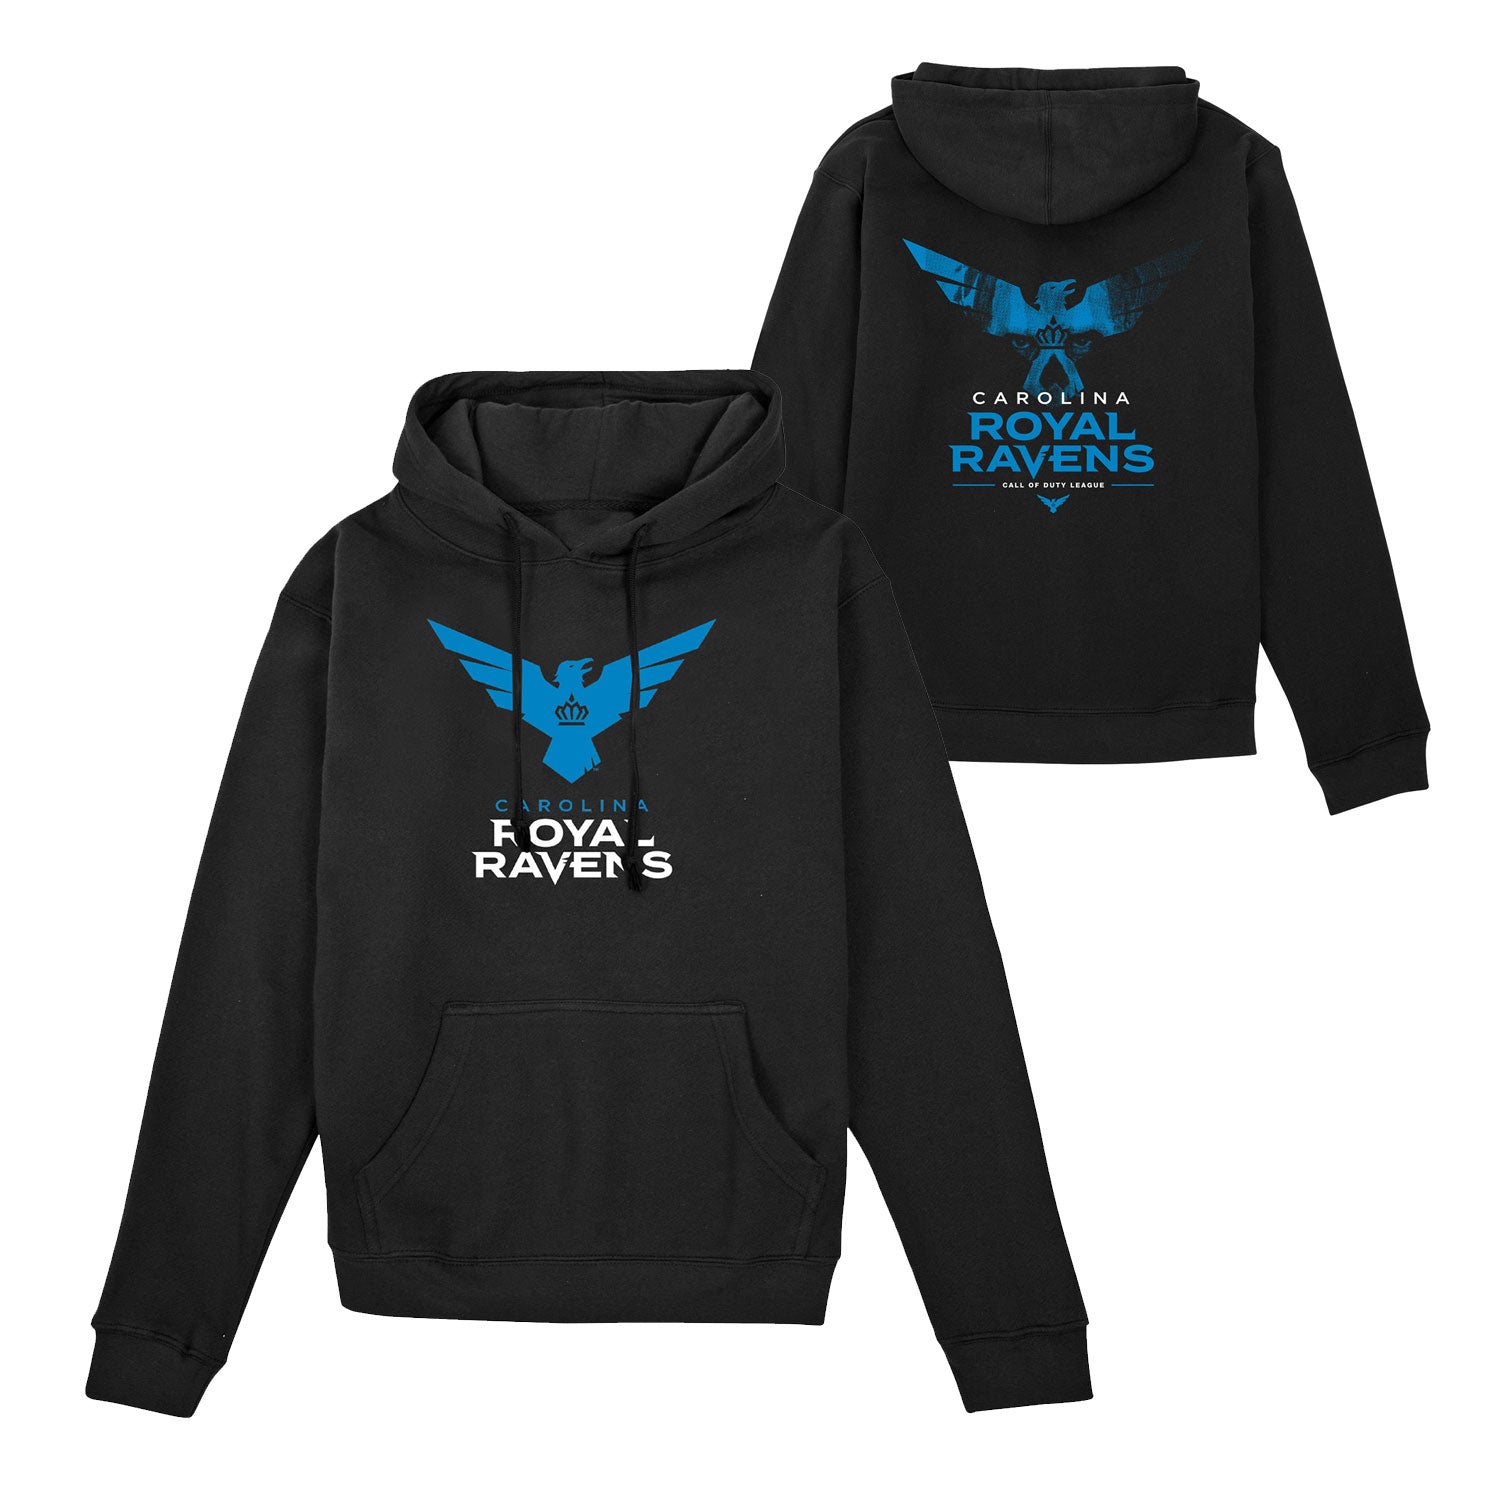 Carolina Royal Ravens Ghost Logo Black Hoodie - front and back views